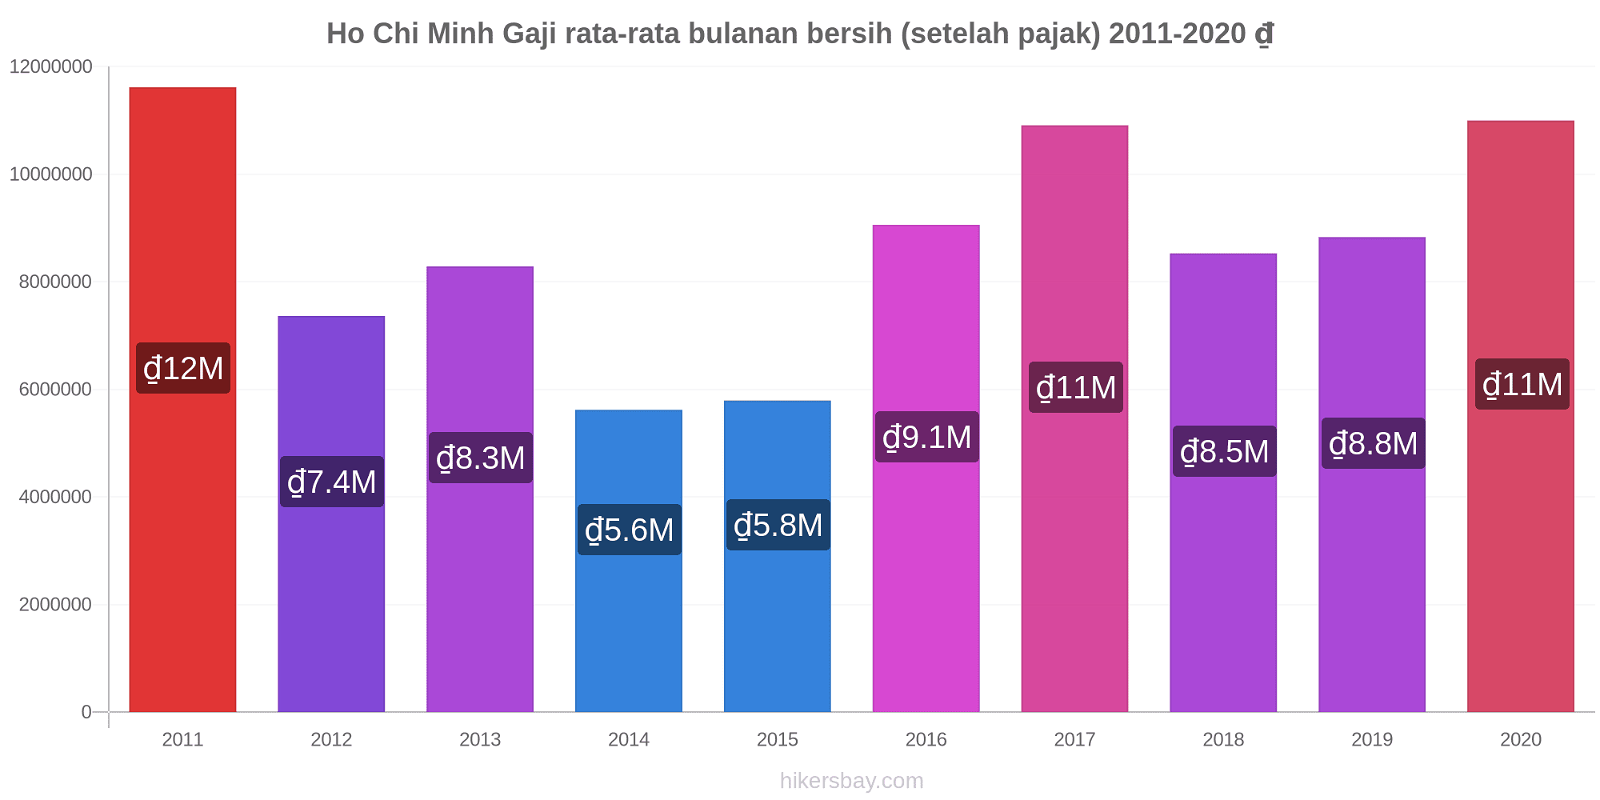 Ho Chi Minh perubahan harga Gaji rata-rata bulanan bersih (setelah pajak) hikersbay.com